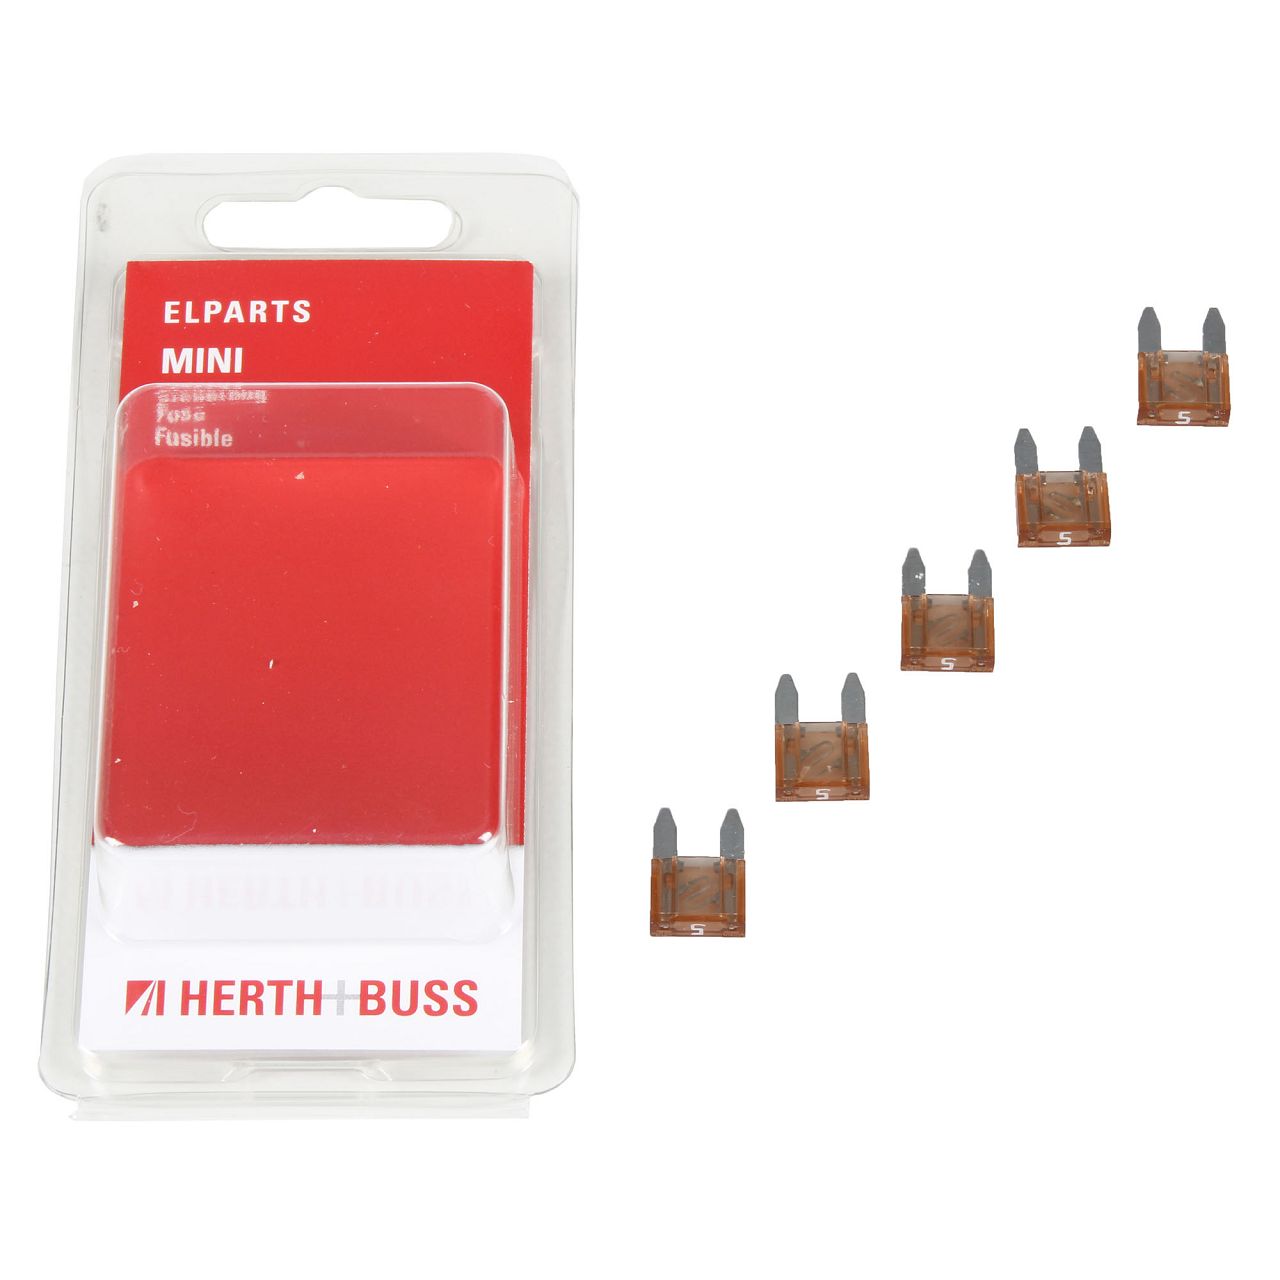 5x HERTH+BUSS ELPARTS Sicherung MINI-Flachsicherung 5A bis 32V HELLBRAUN